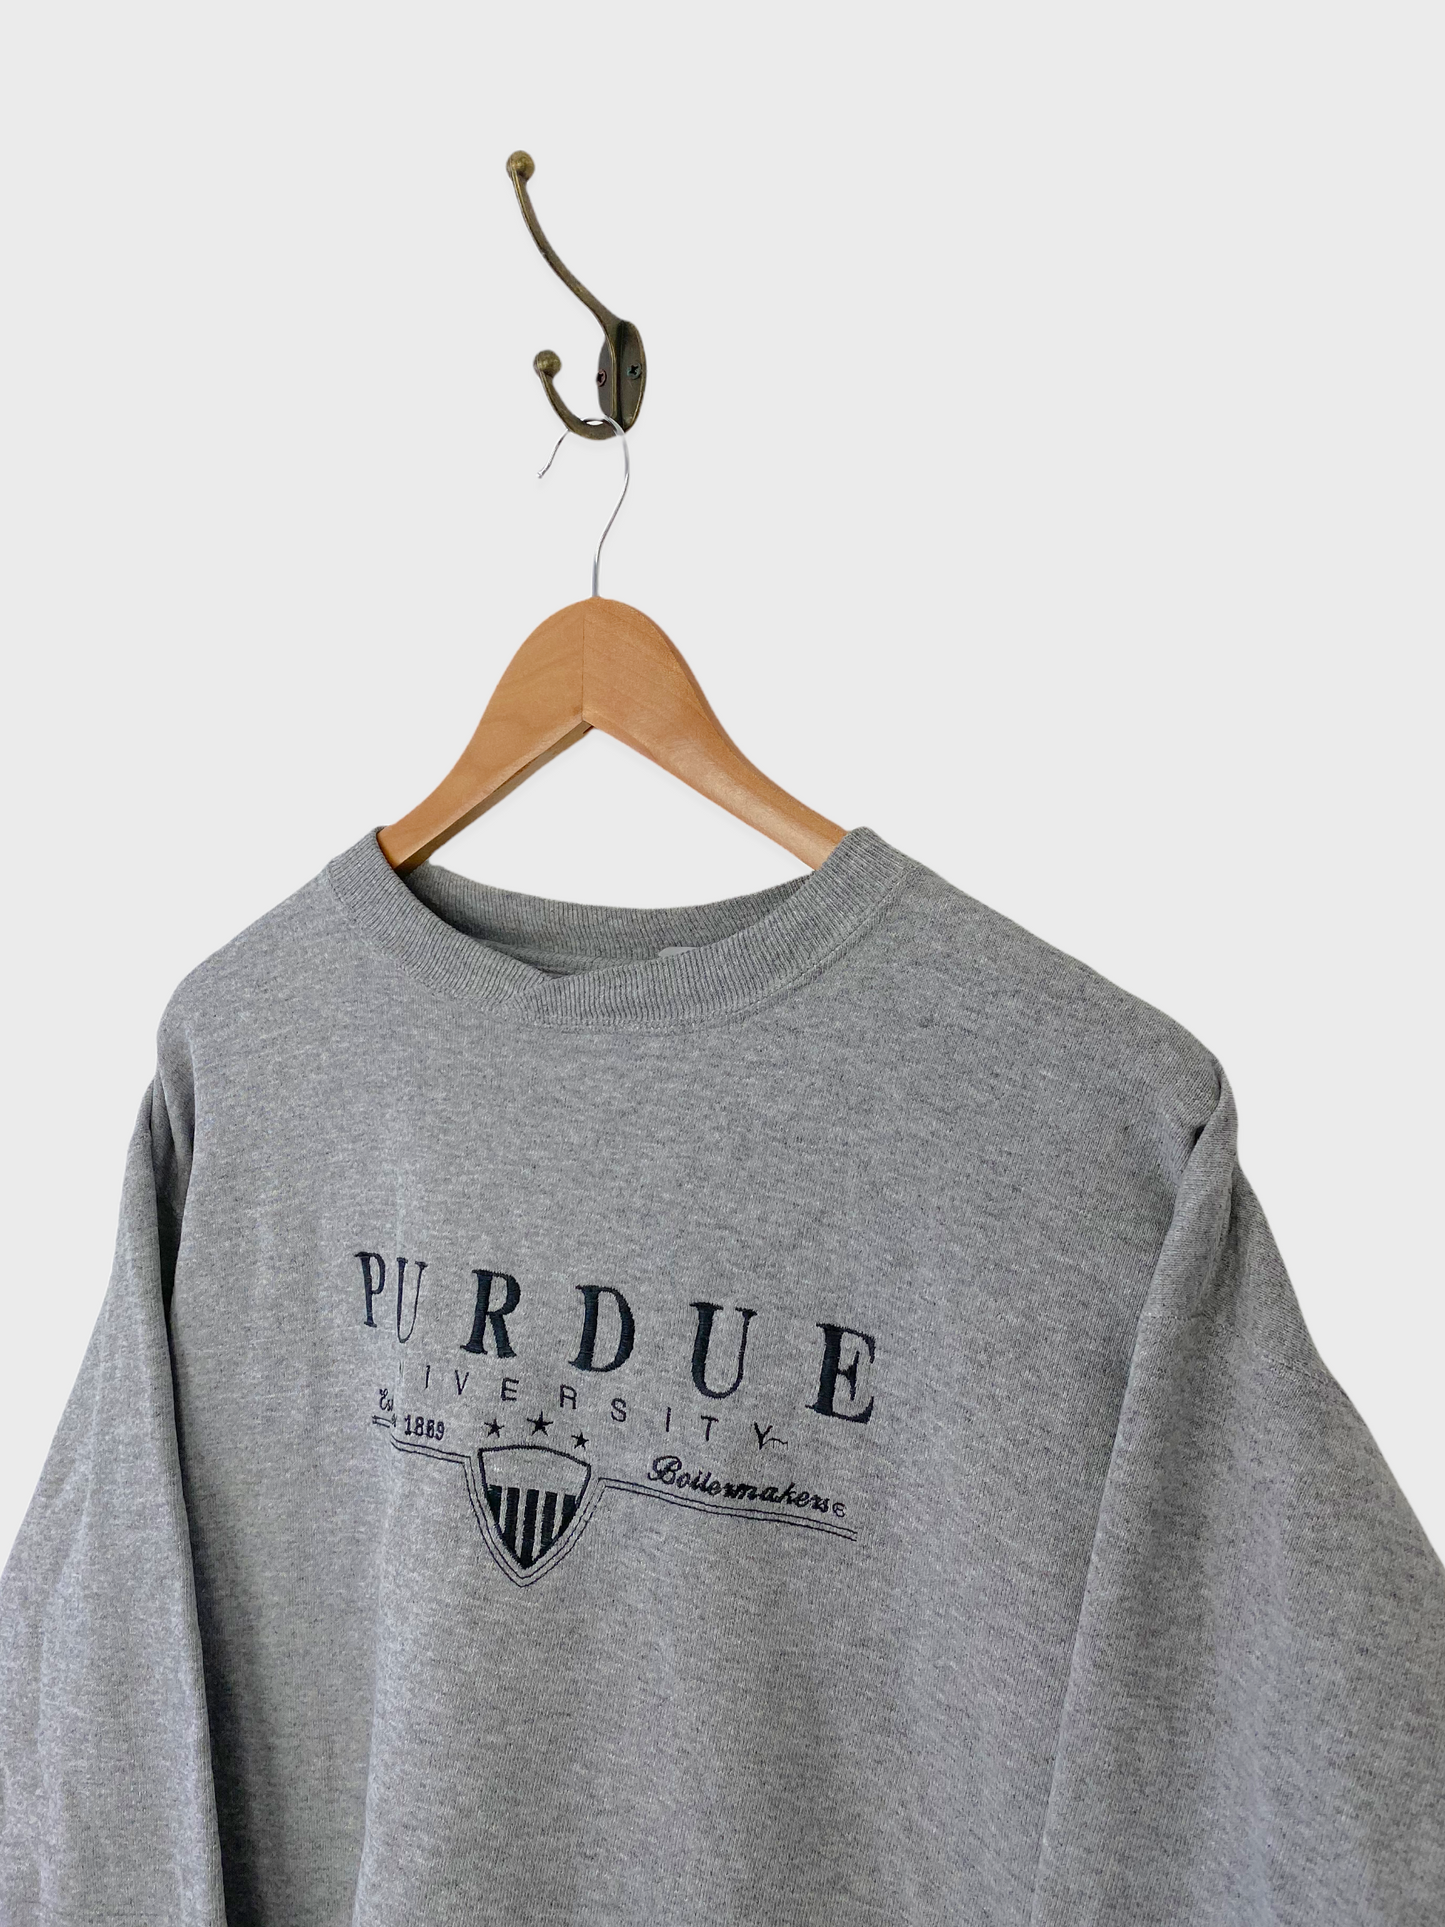 90's Purdue Boilermakers Embroidered Vintage Sweatshirt Size 12